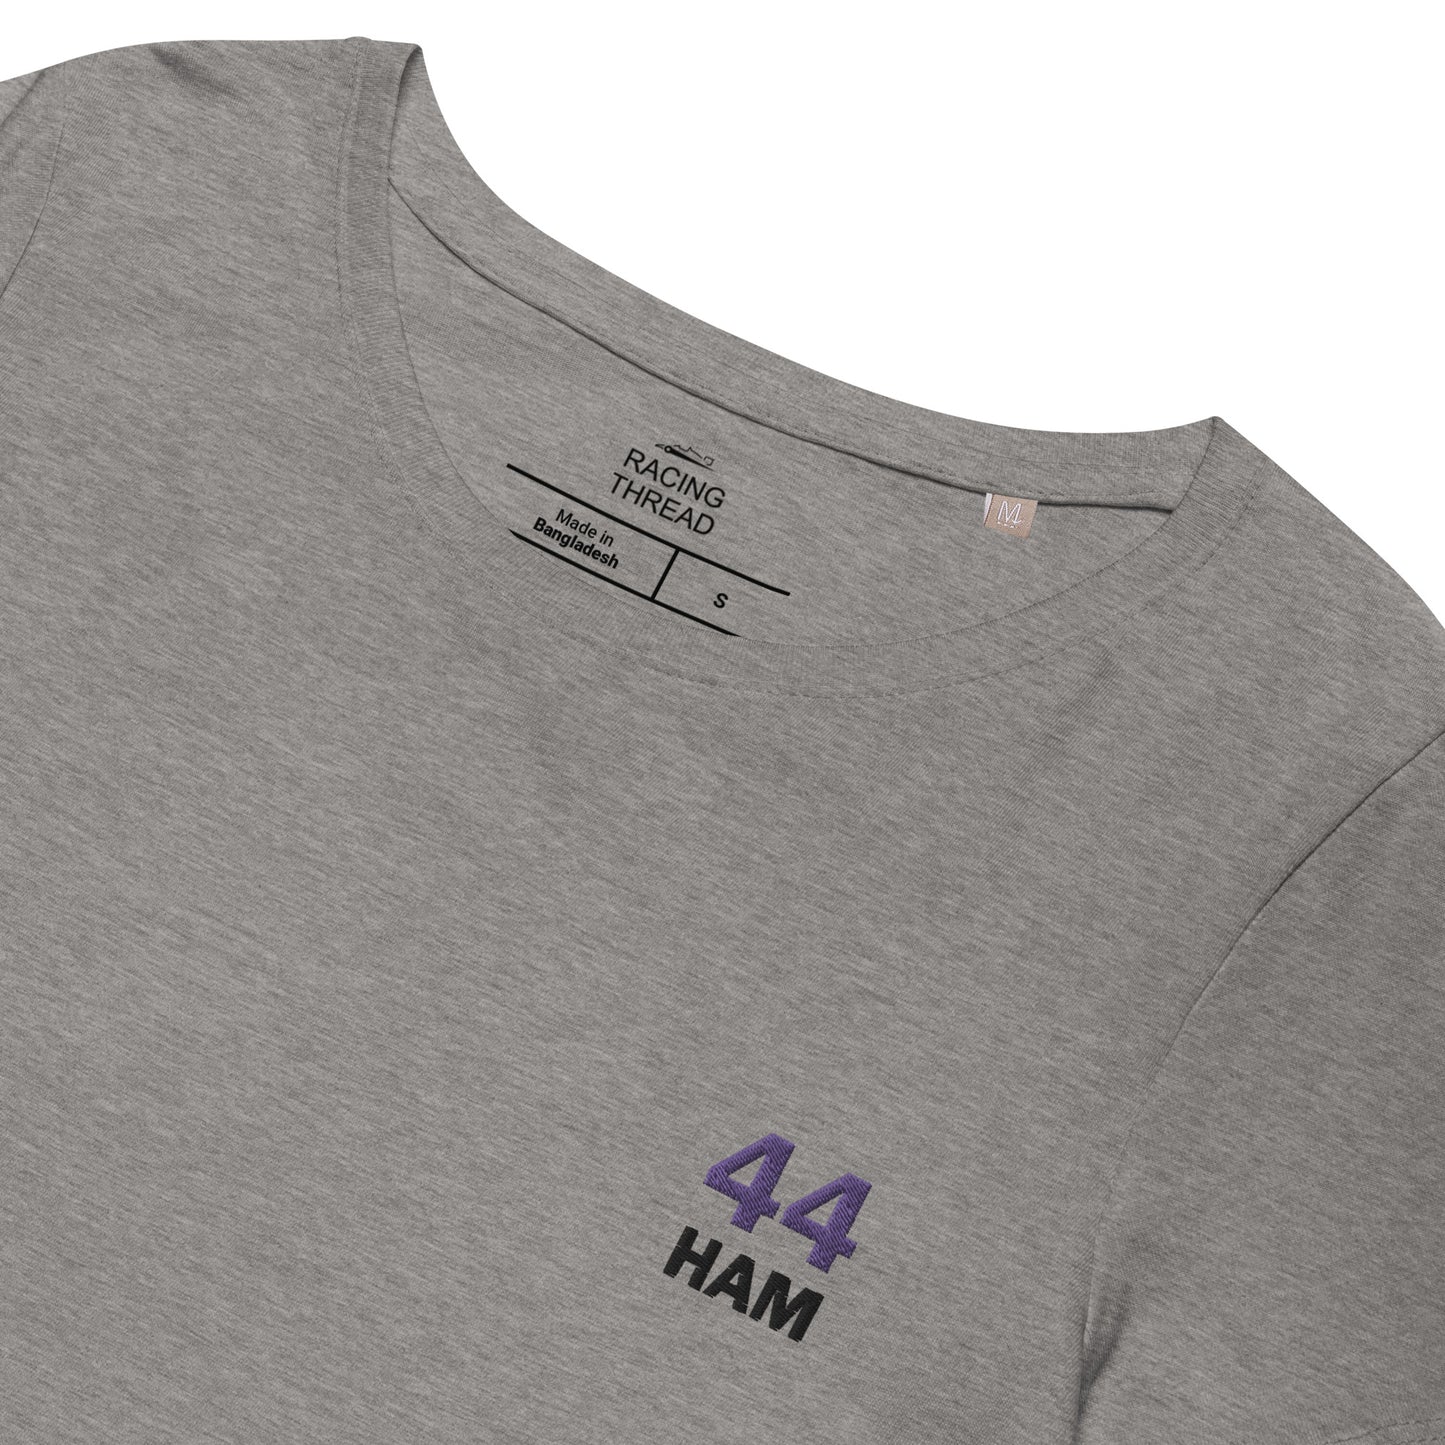 HAM 44 - Purple